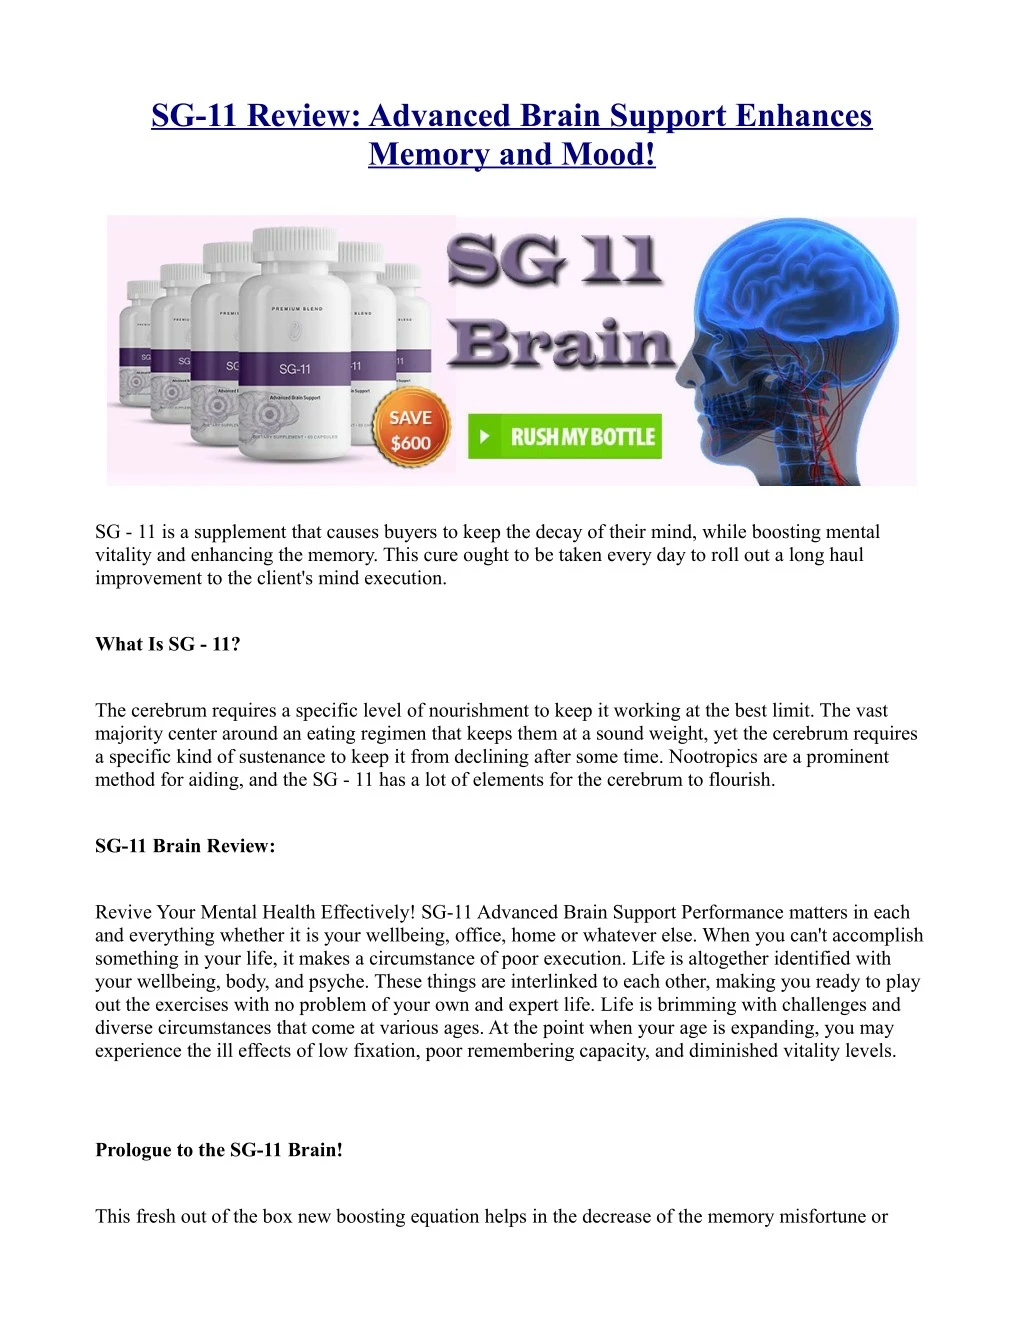 sg 11 review advanced brain support enhances